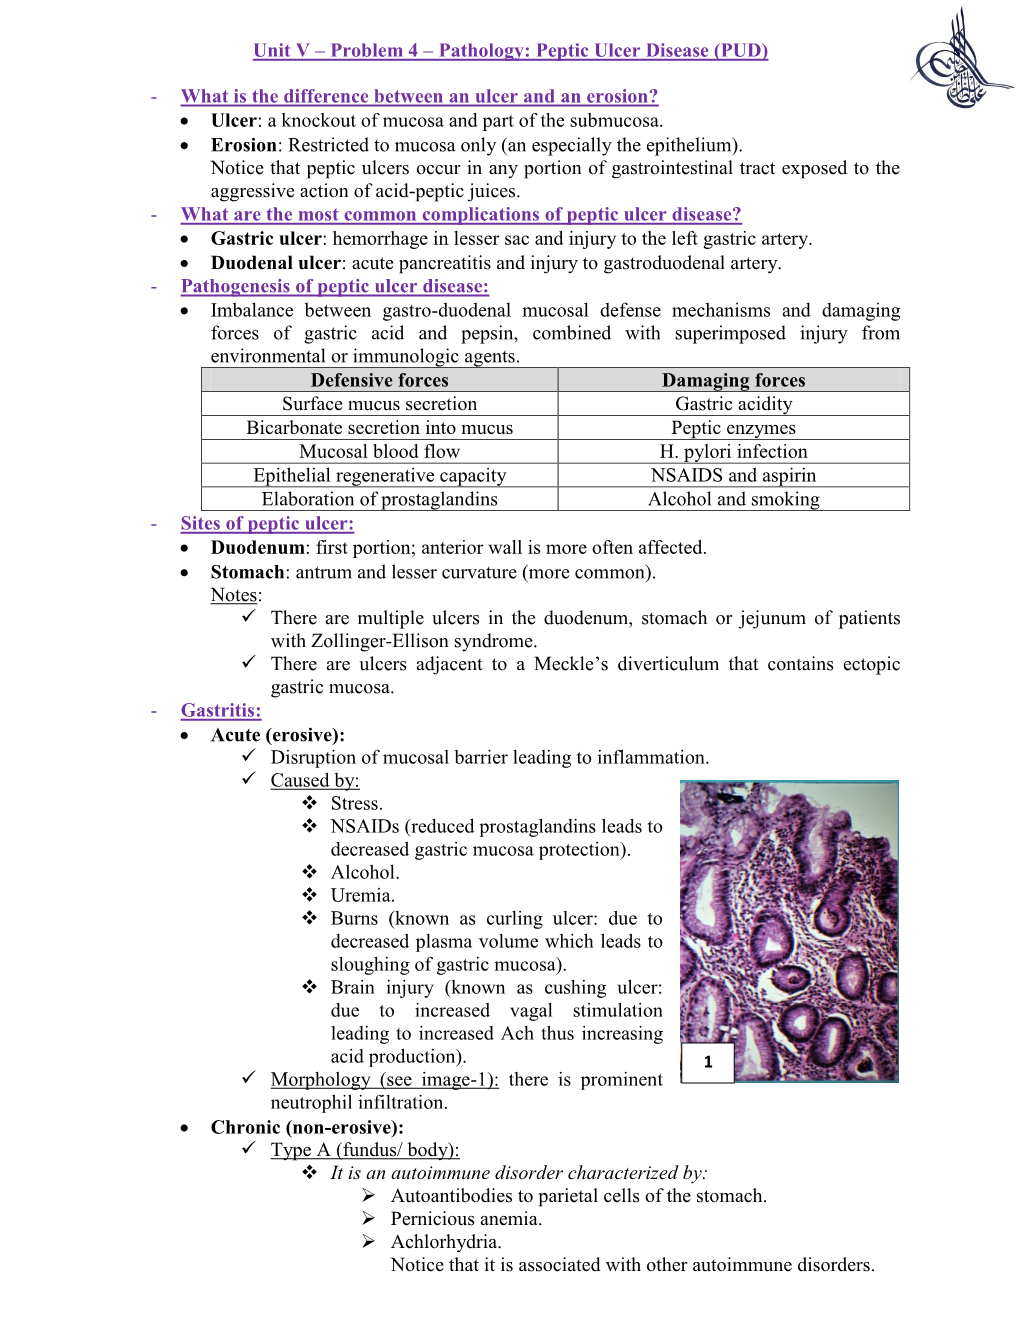 Peptic Ulcer Disease (PUD)